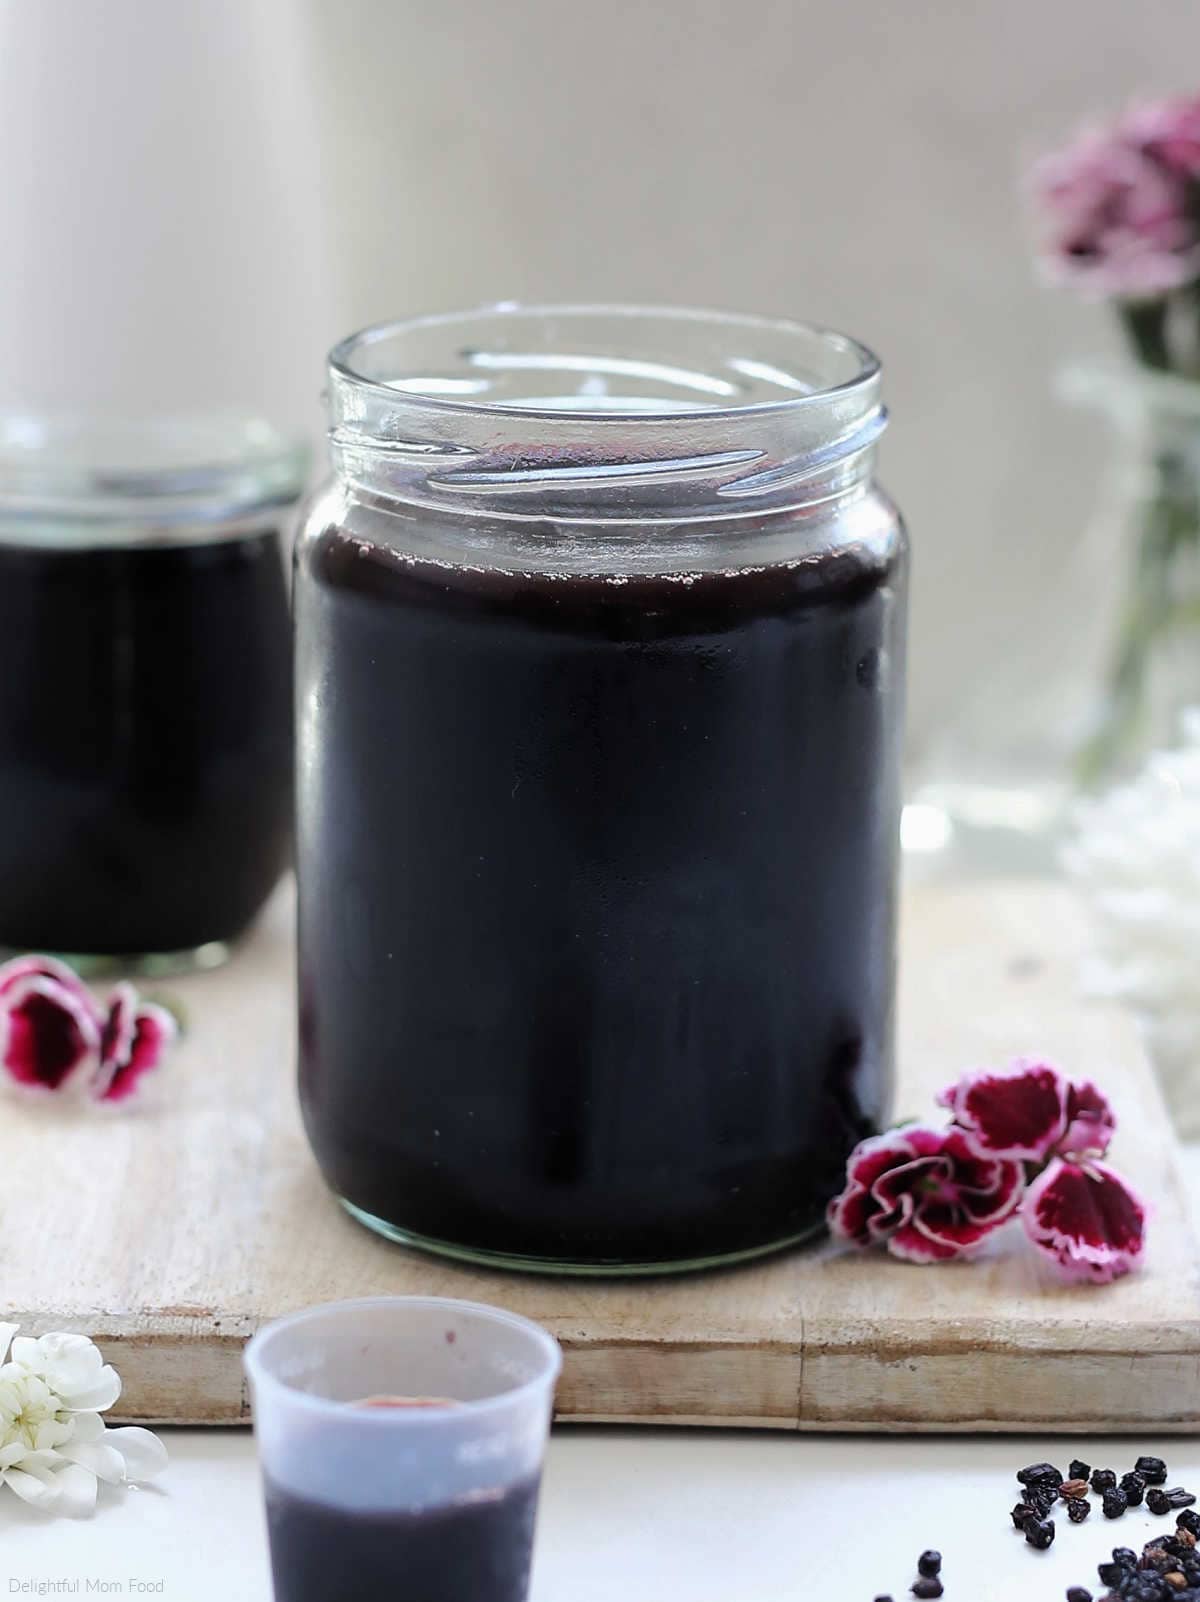 homemade elderberry syrup recipe in a glass jar